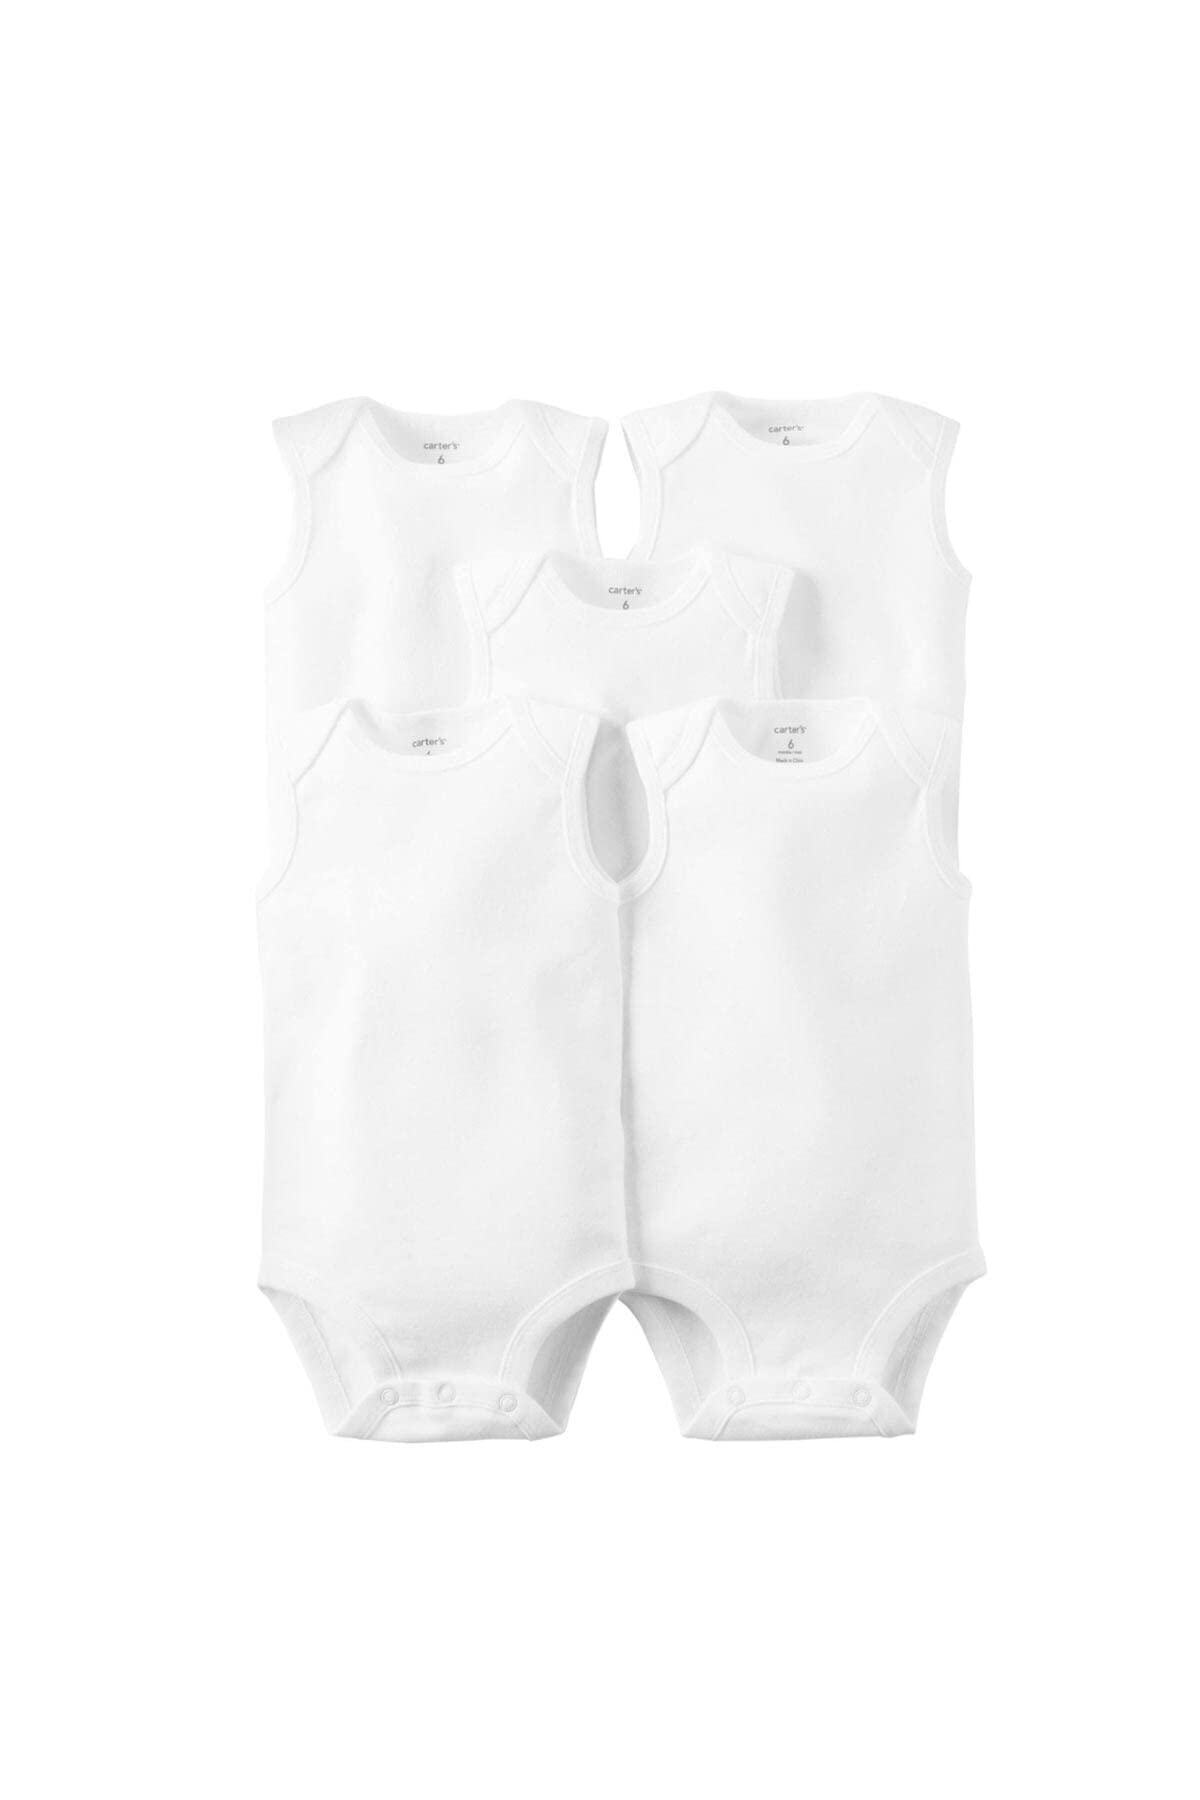 Carters Unisex Baby 5-Pack Sleeveless Original Bodysuits, White, NB